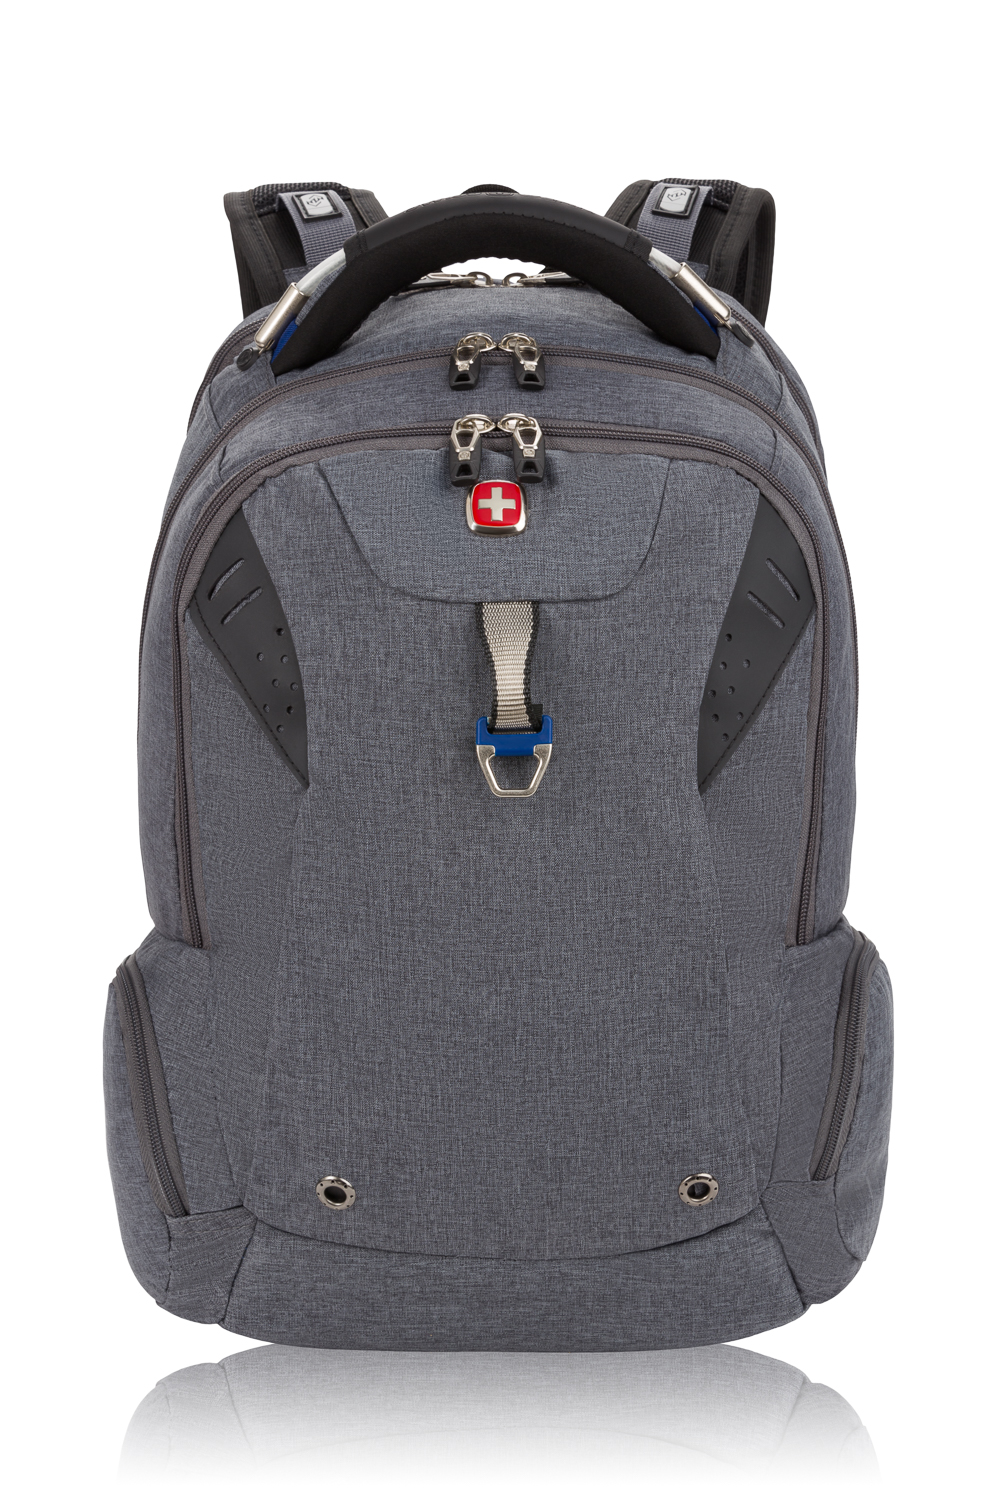 Swiss Eagle SmartScan Laptop Backpack with USB Port India | Ubuy